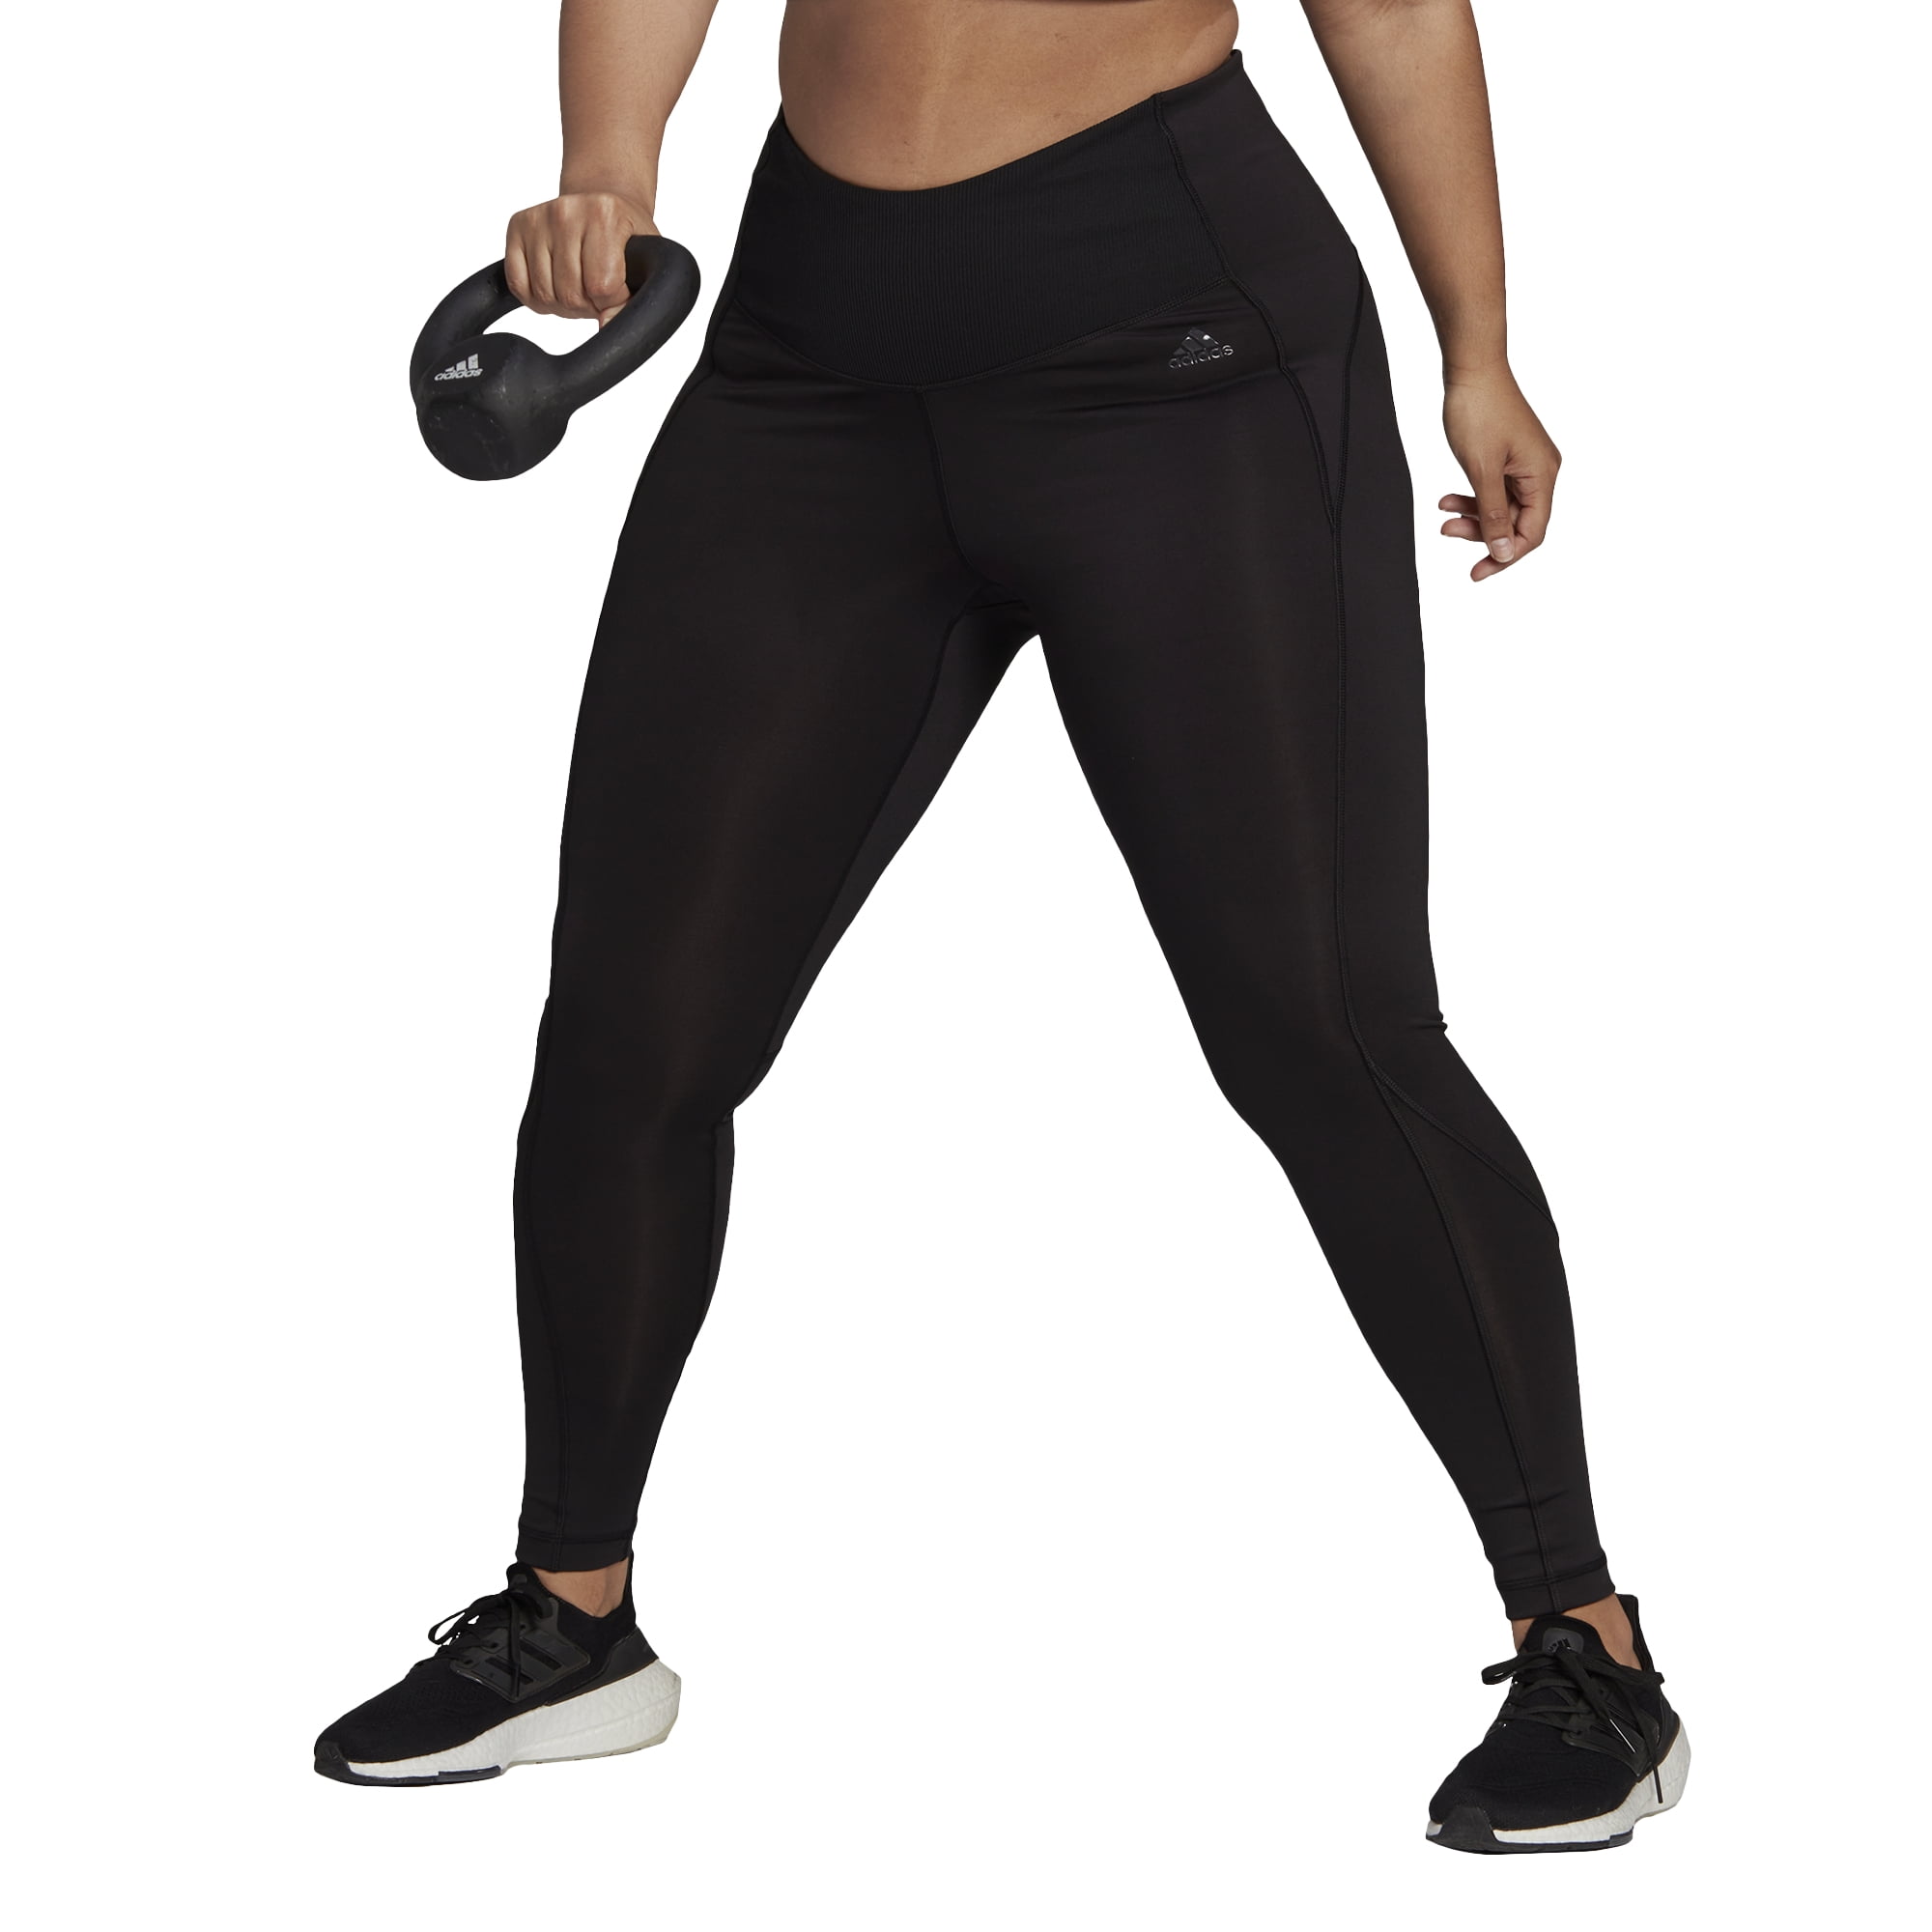 Adidas Women's Hyperglam Full Length Training Tights Plus Size 2X Black 